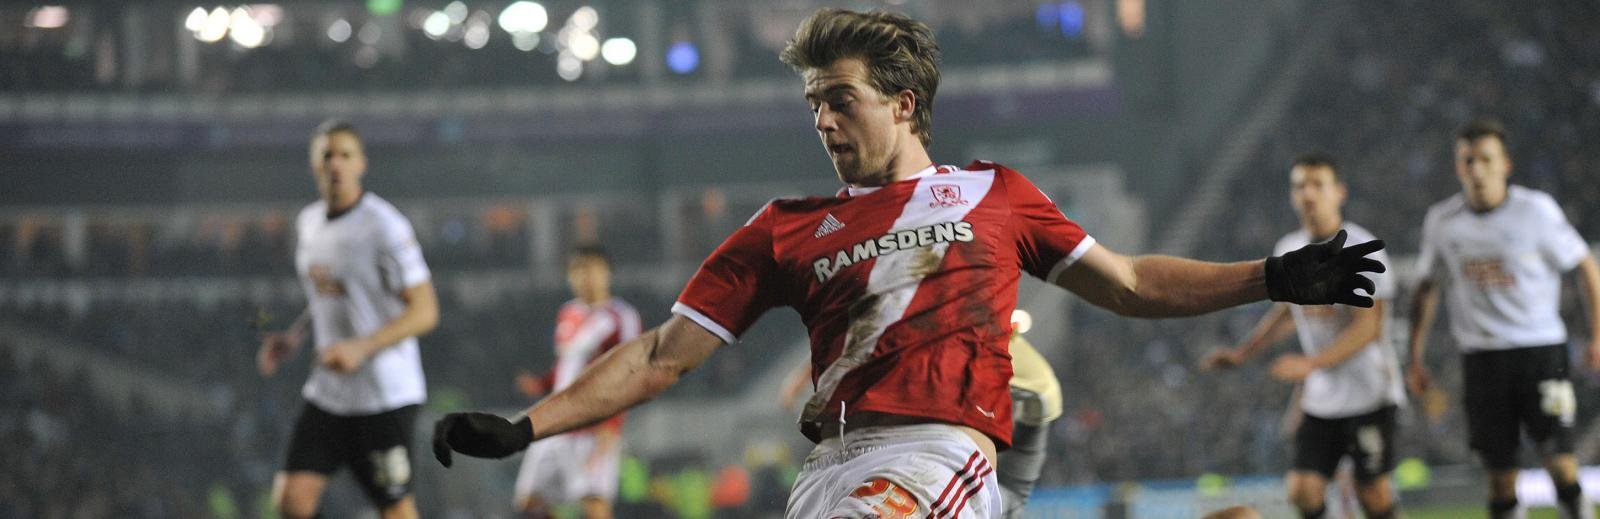 Middlesbrough hopeful over re-signing Premier League ace